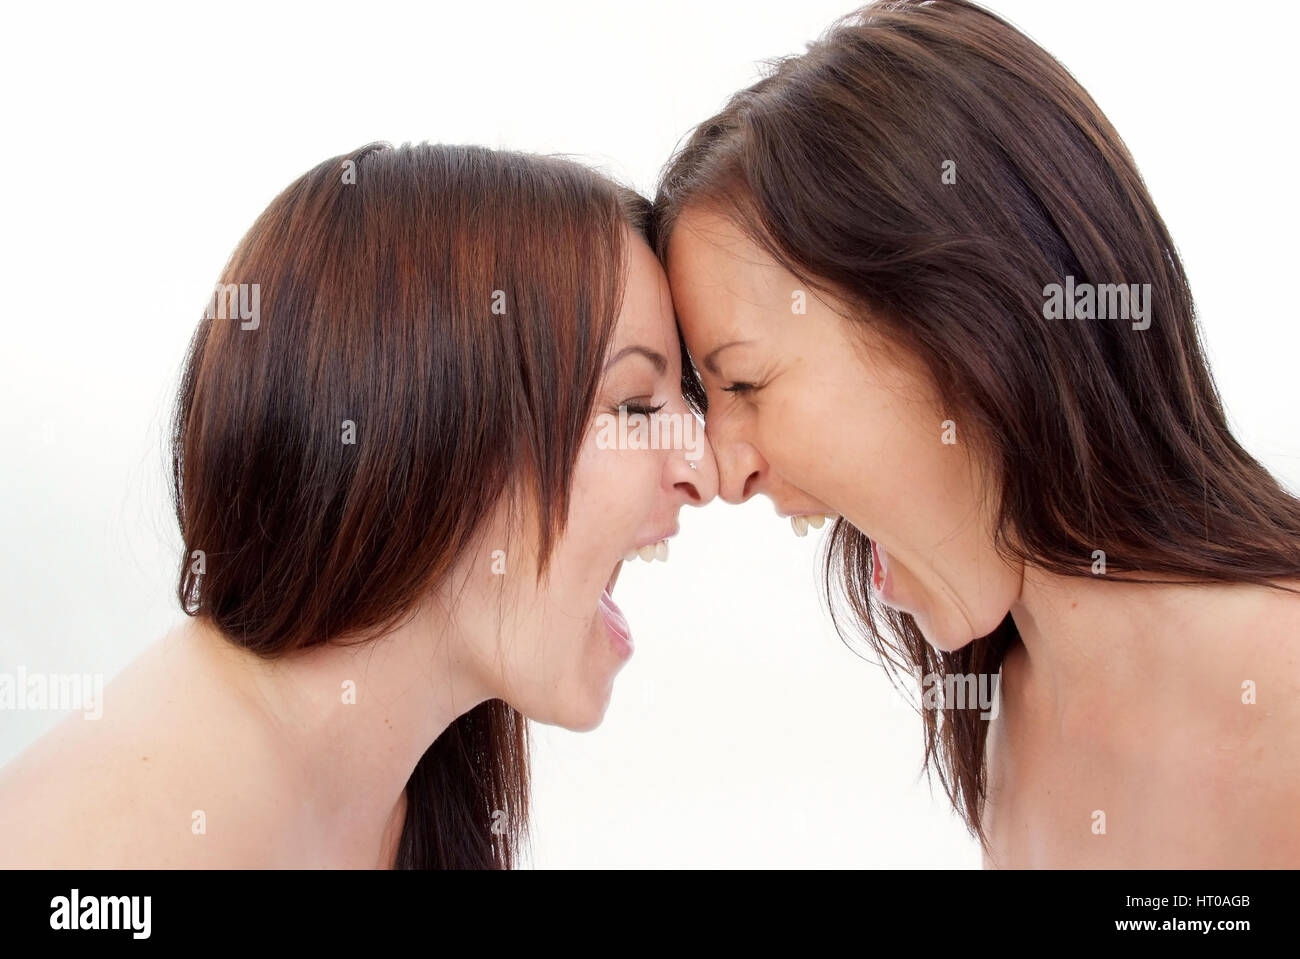 Zwillinge schreien sich an - twins screaming each other Stock Photo